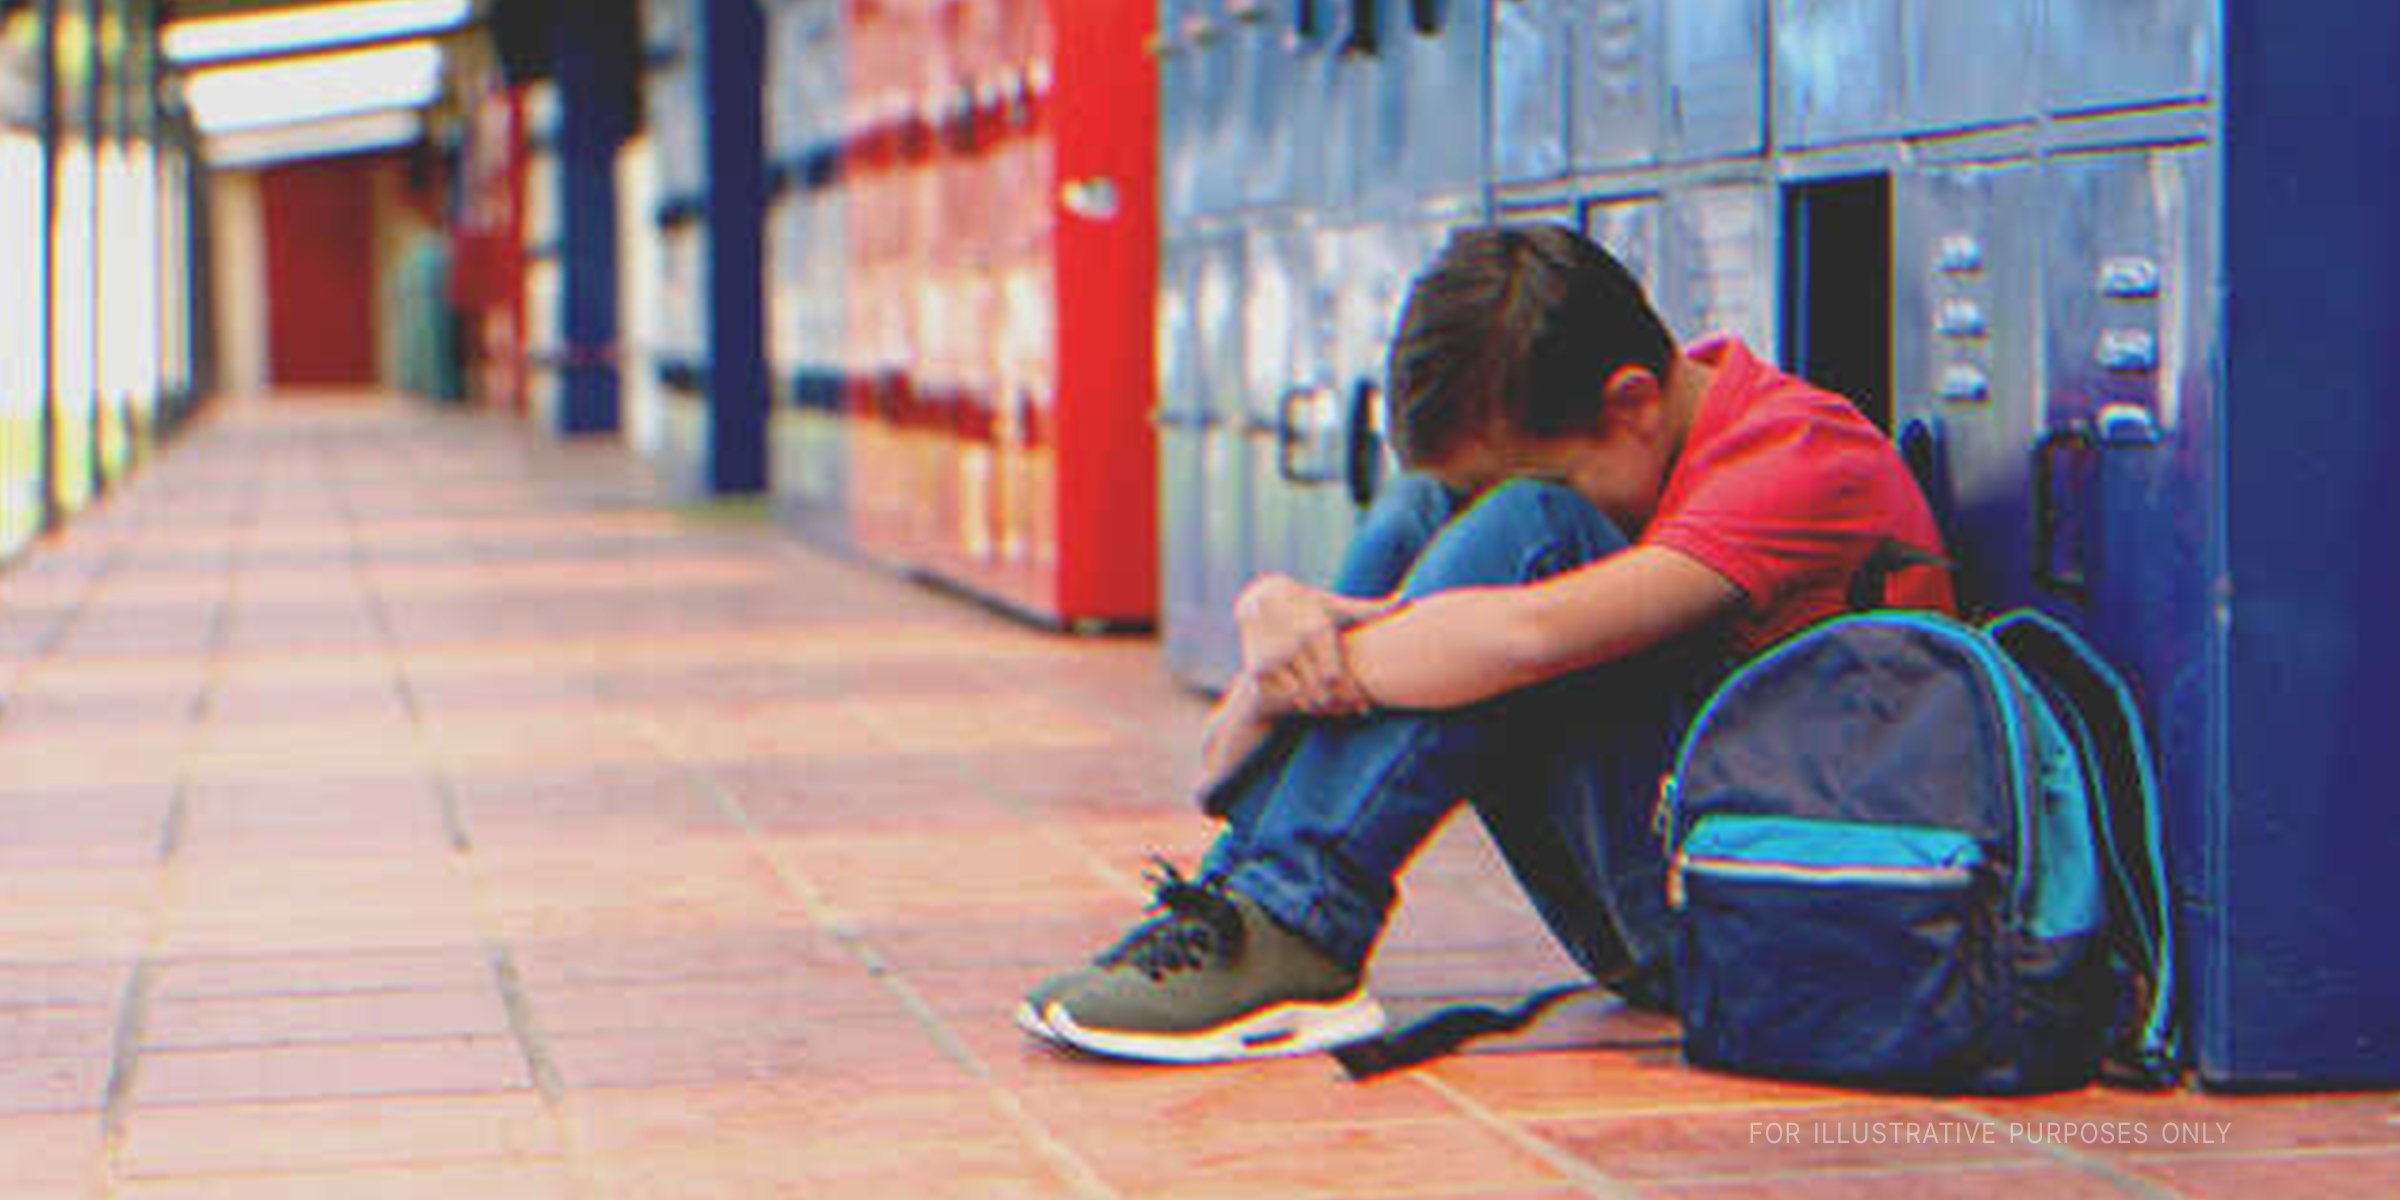 Rich Boy Mocks Poor Classmate. | Source: Getty Images